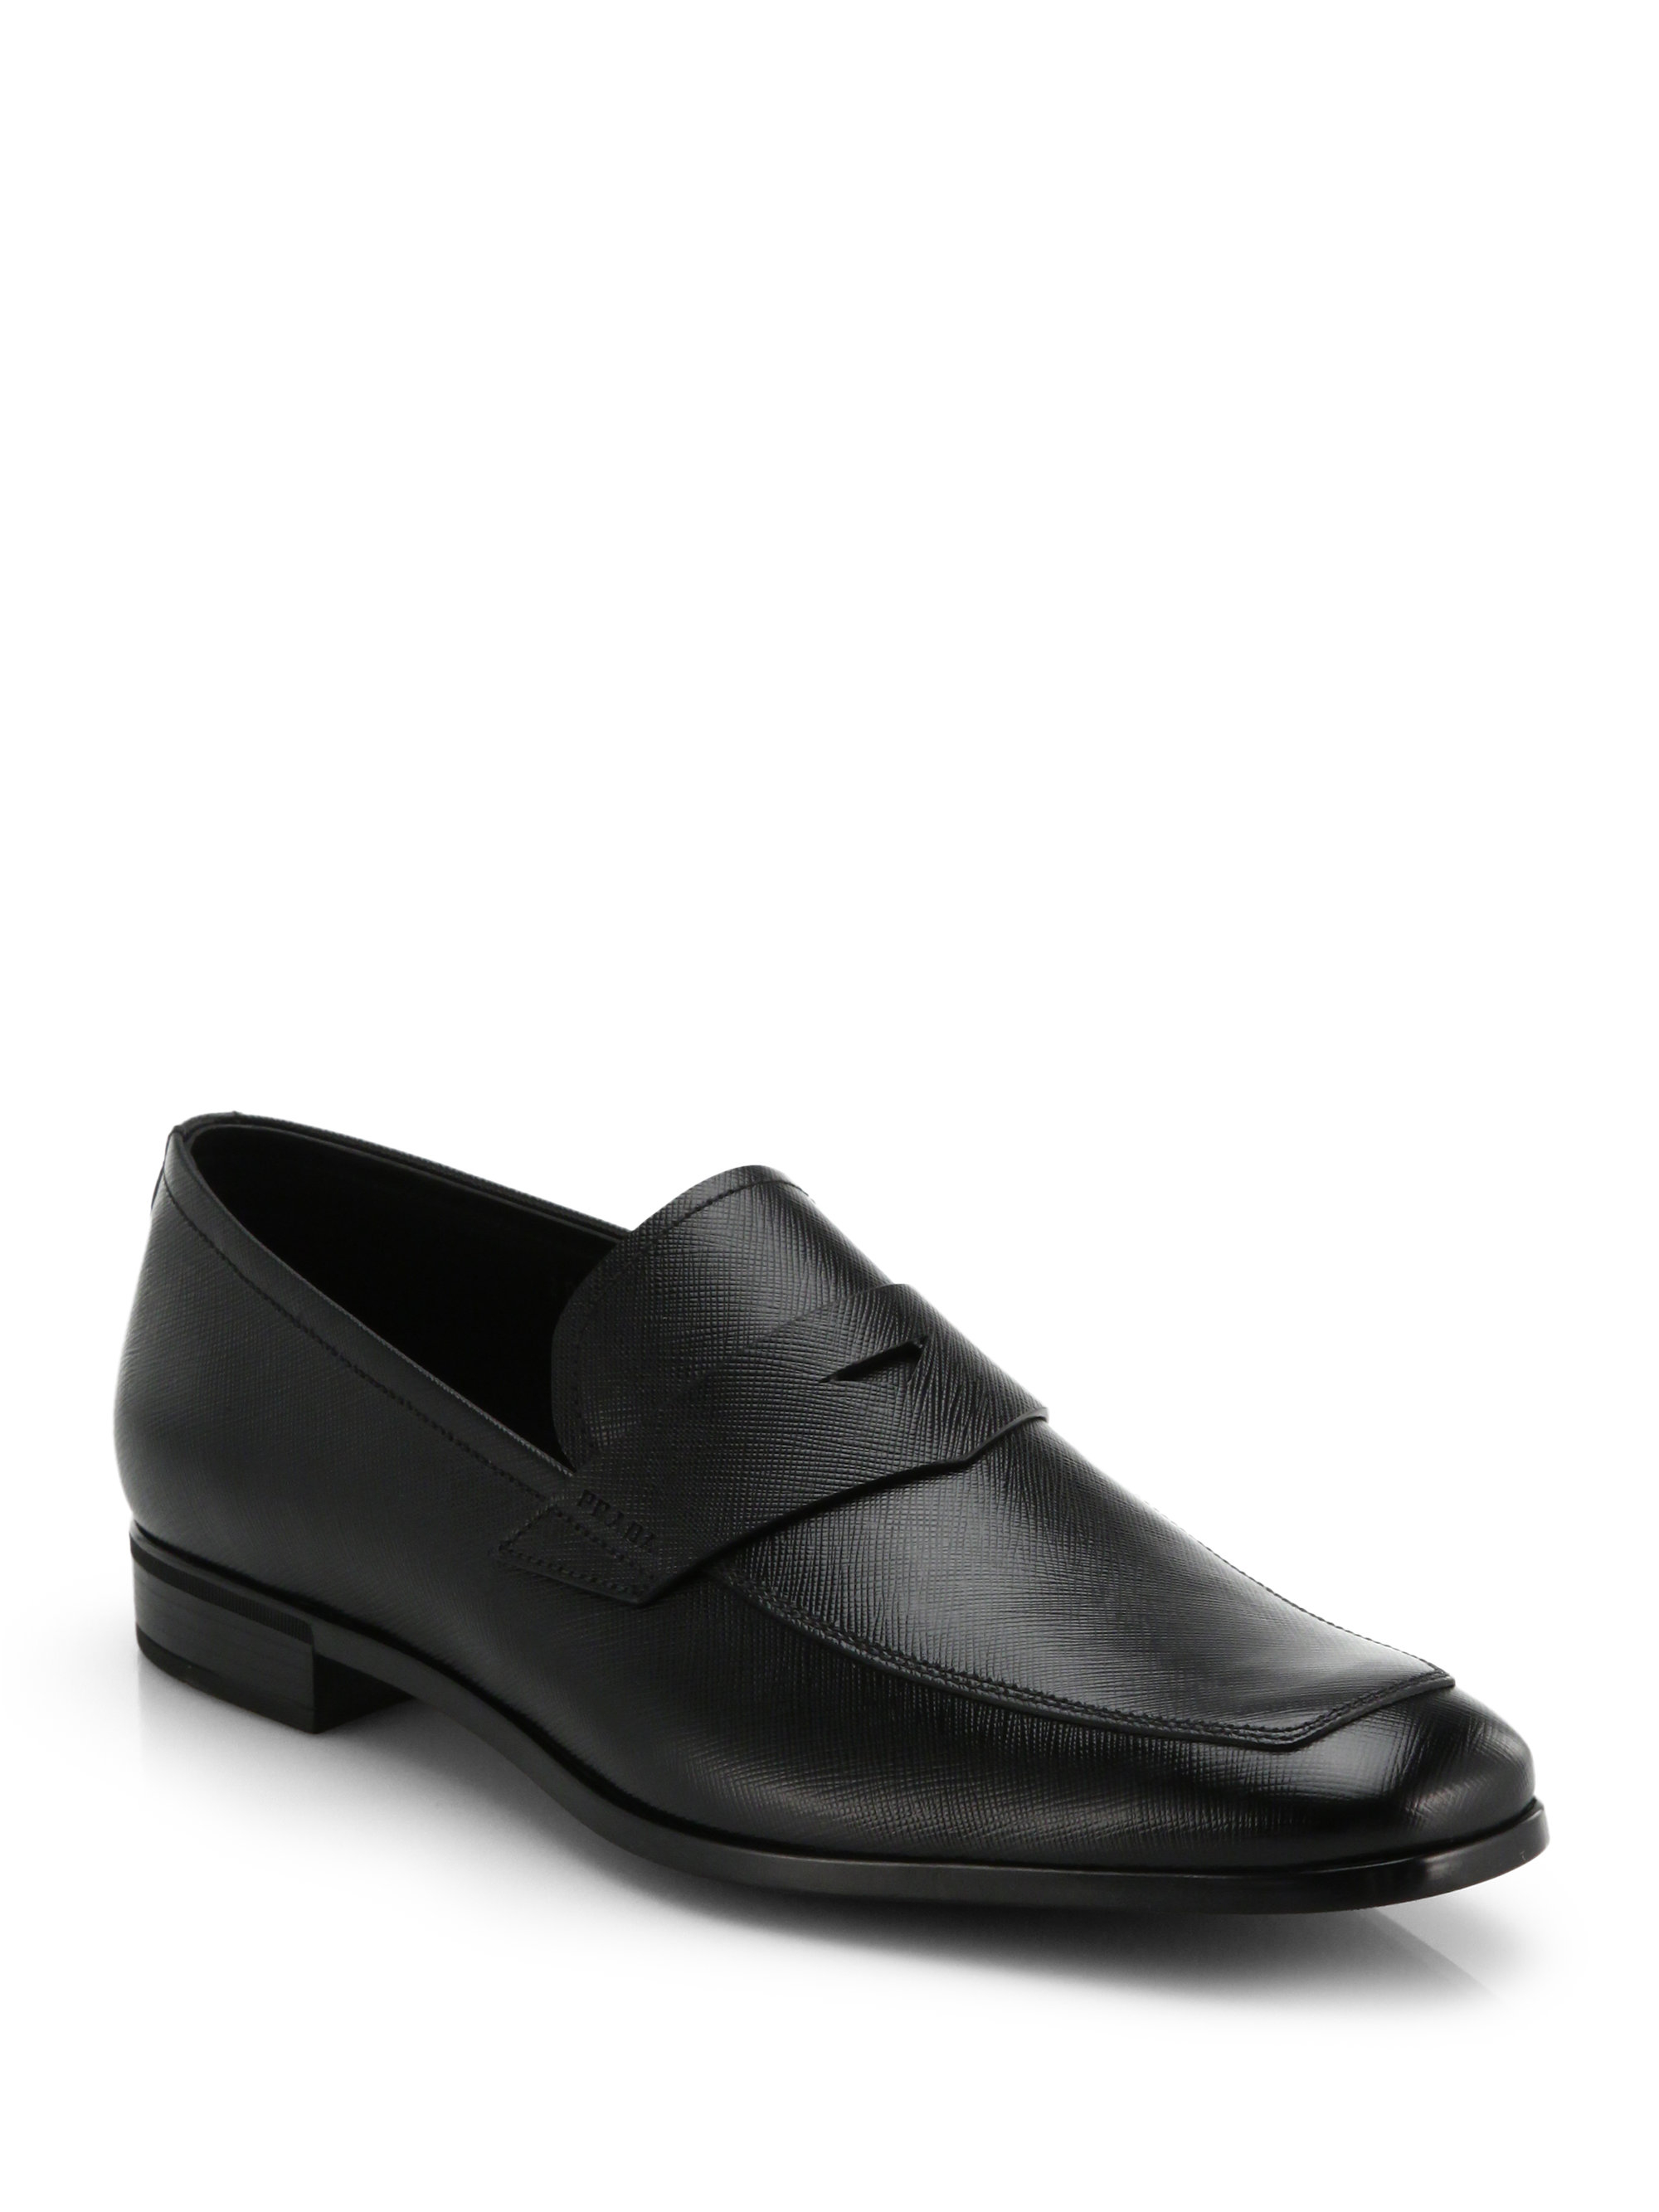 Prada Saffiano Penny Loafers in Black for Men - Lyst